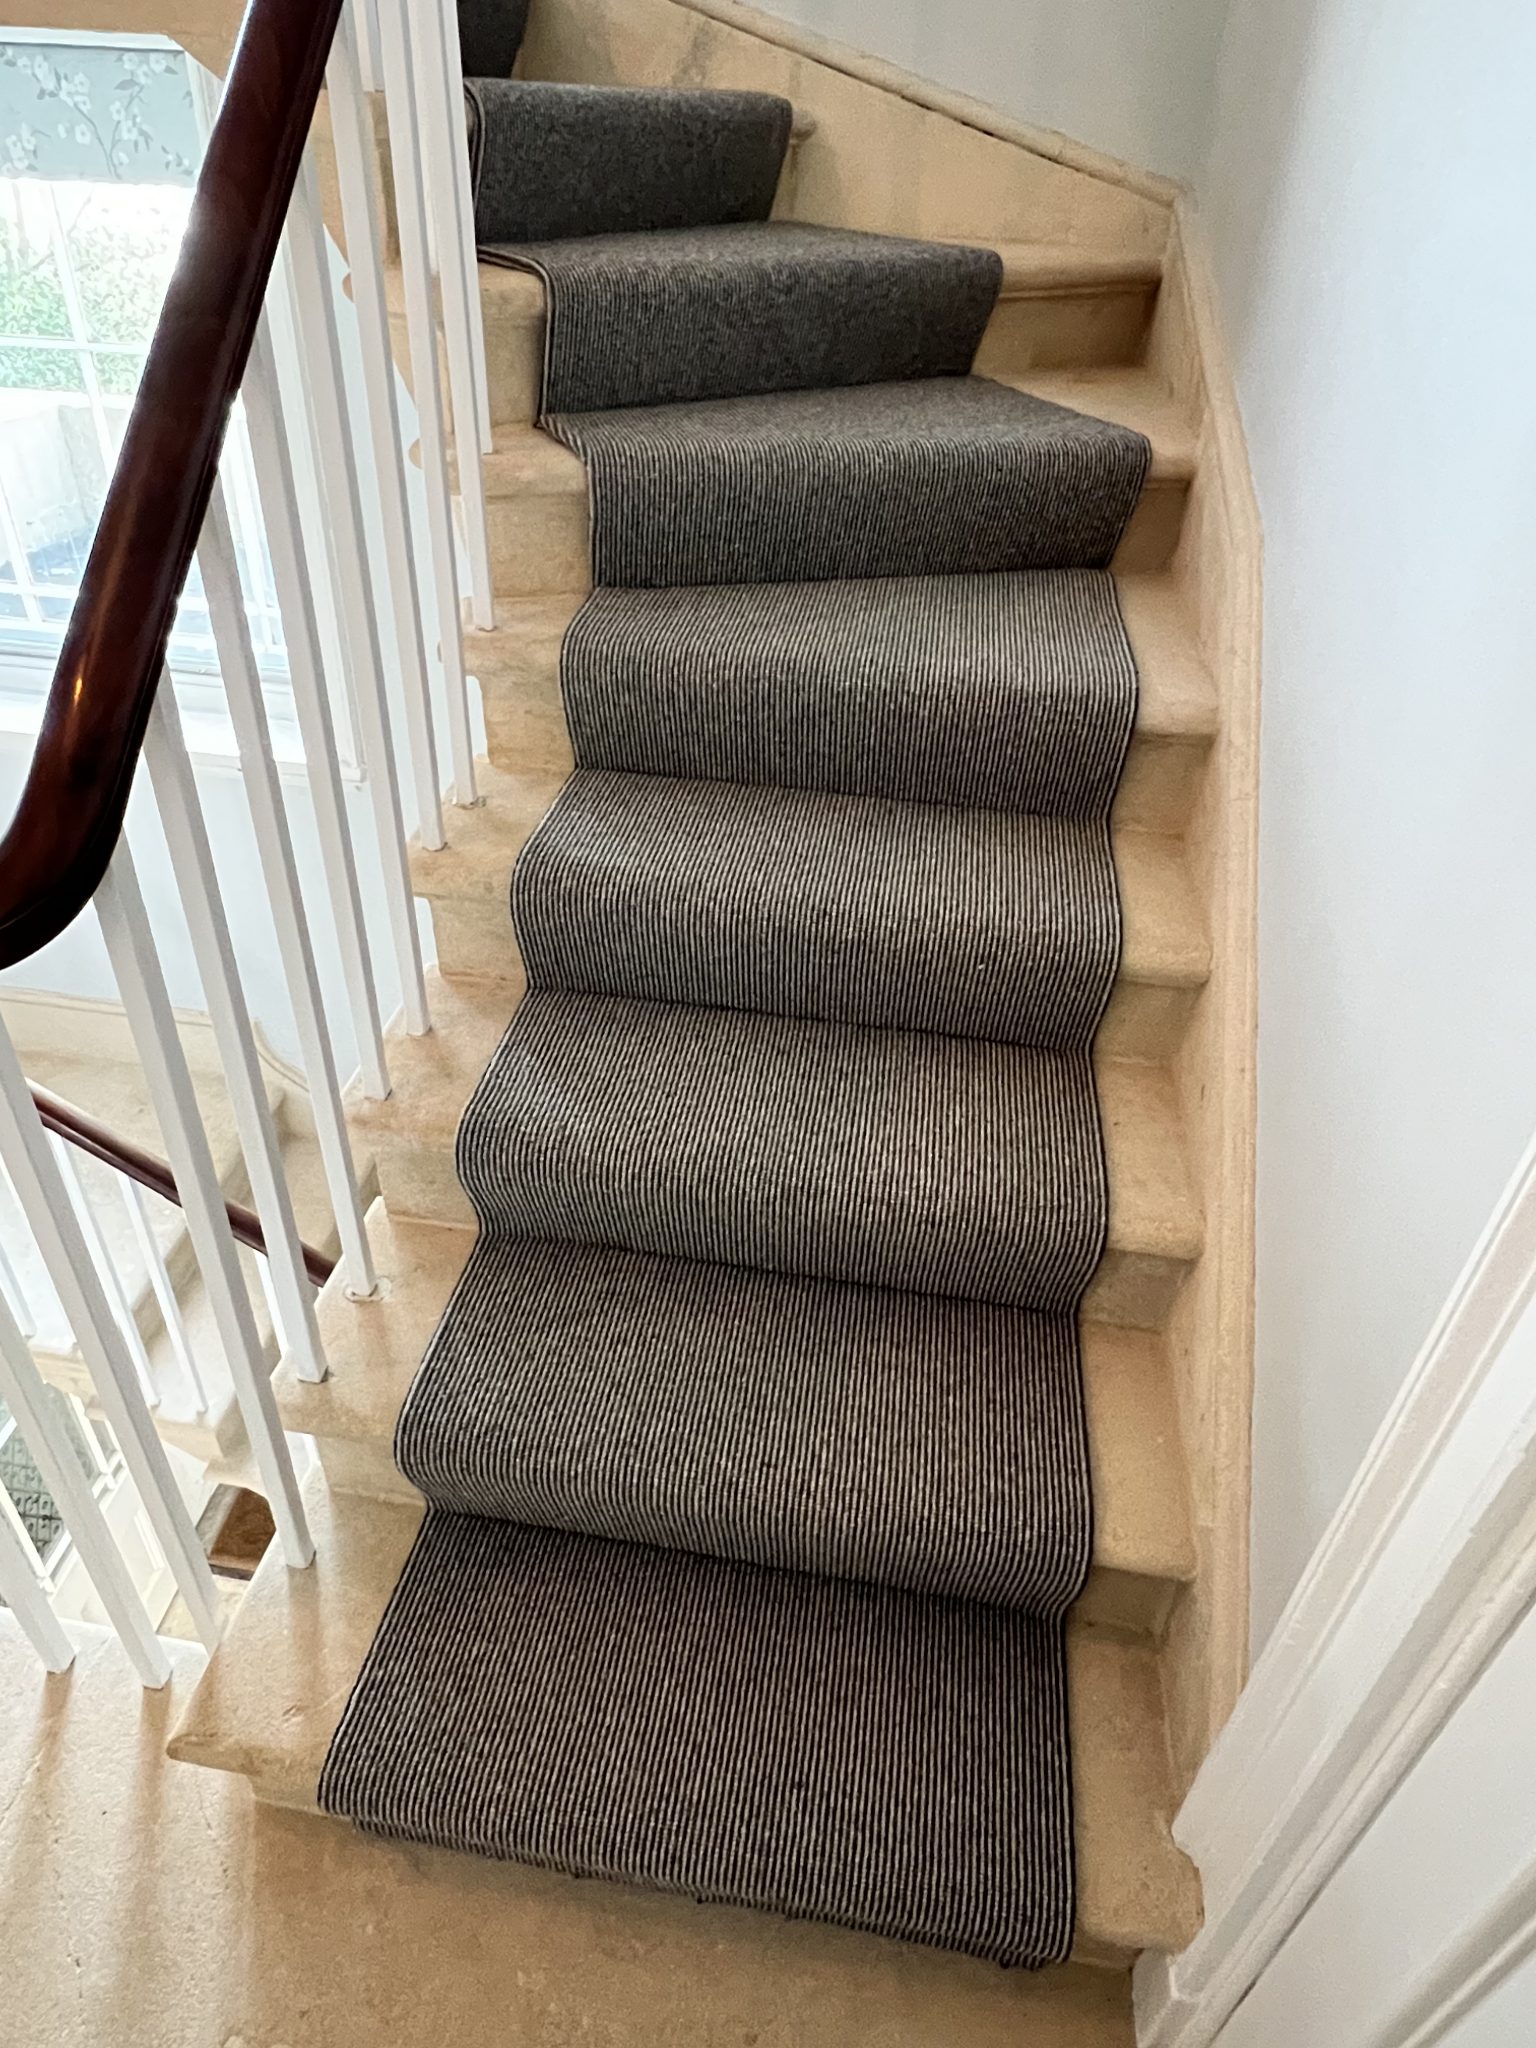 Avonvale Carpets - Bathwick Hill - Bath - Stairs - Landing - Carpet - Runner - Telenzo Carpets - Mainline - 2